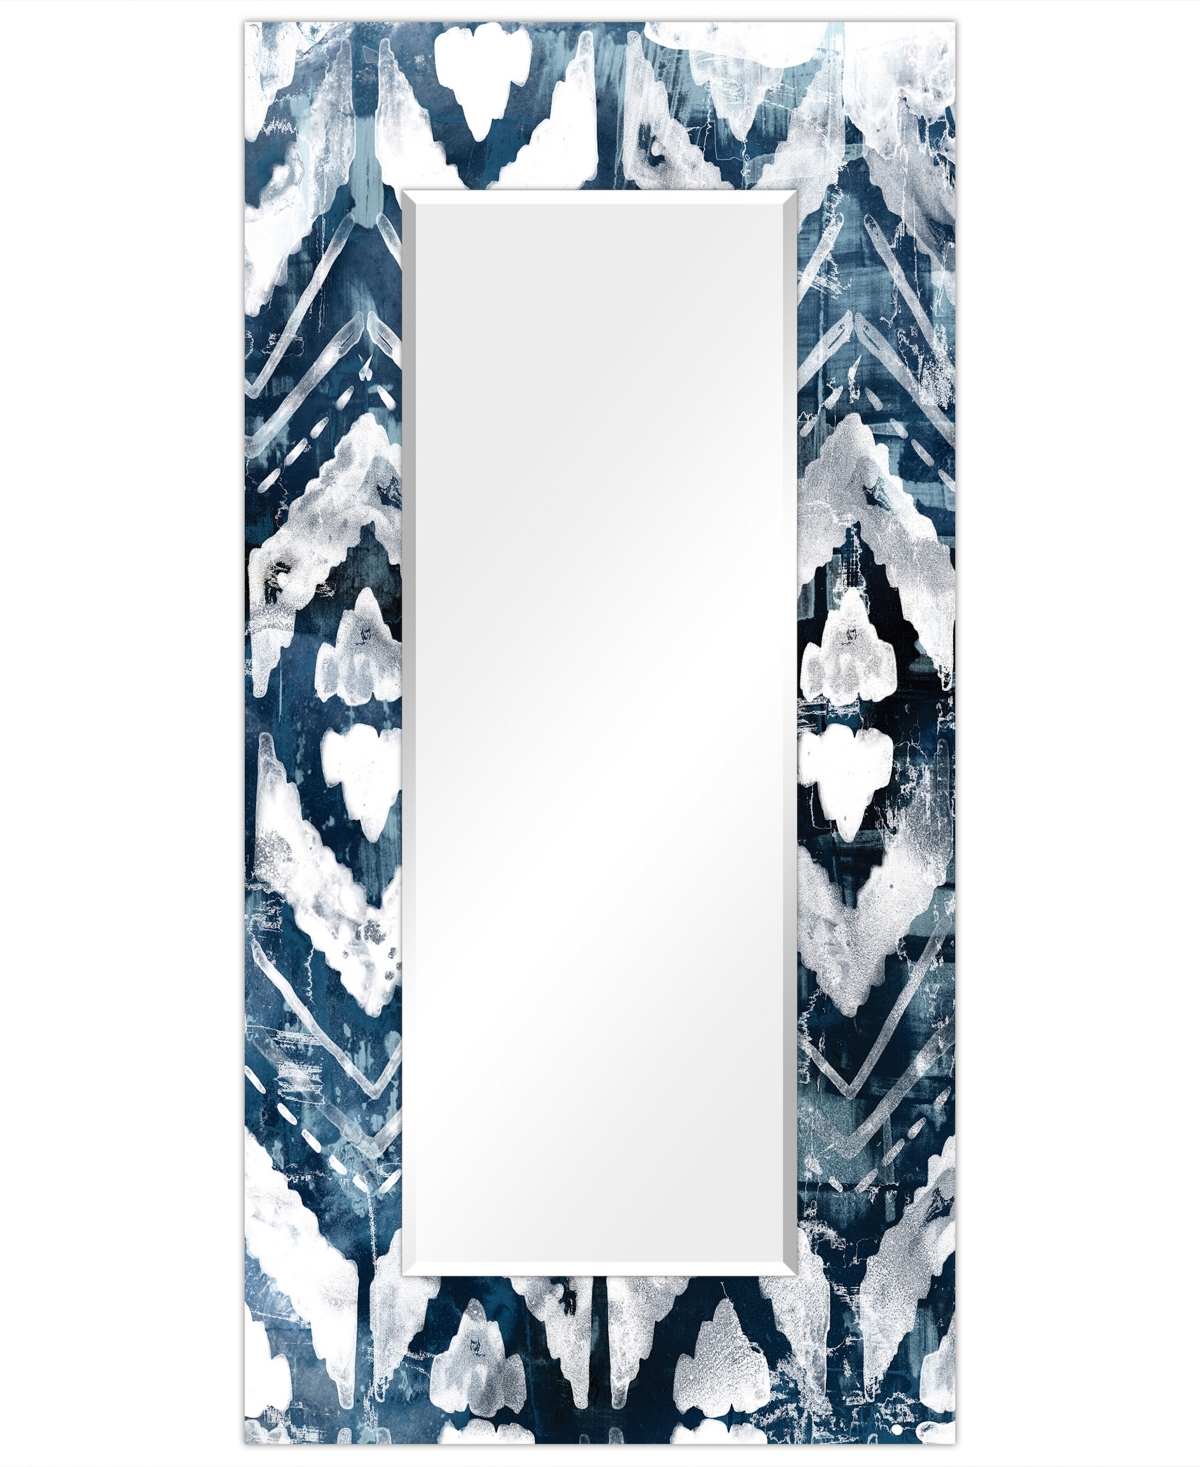 'Extraction' Rectangular On Free Floating Printed Tempered Art Glass Beveled Mirror, 72" x 36" - Indigo, White